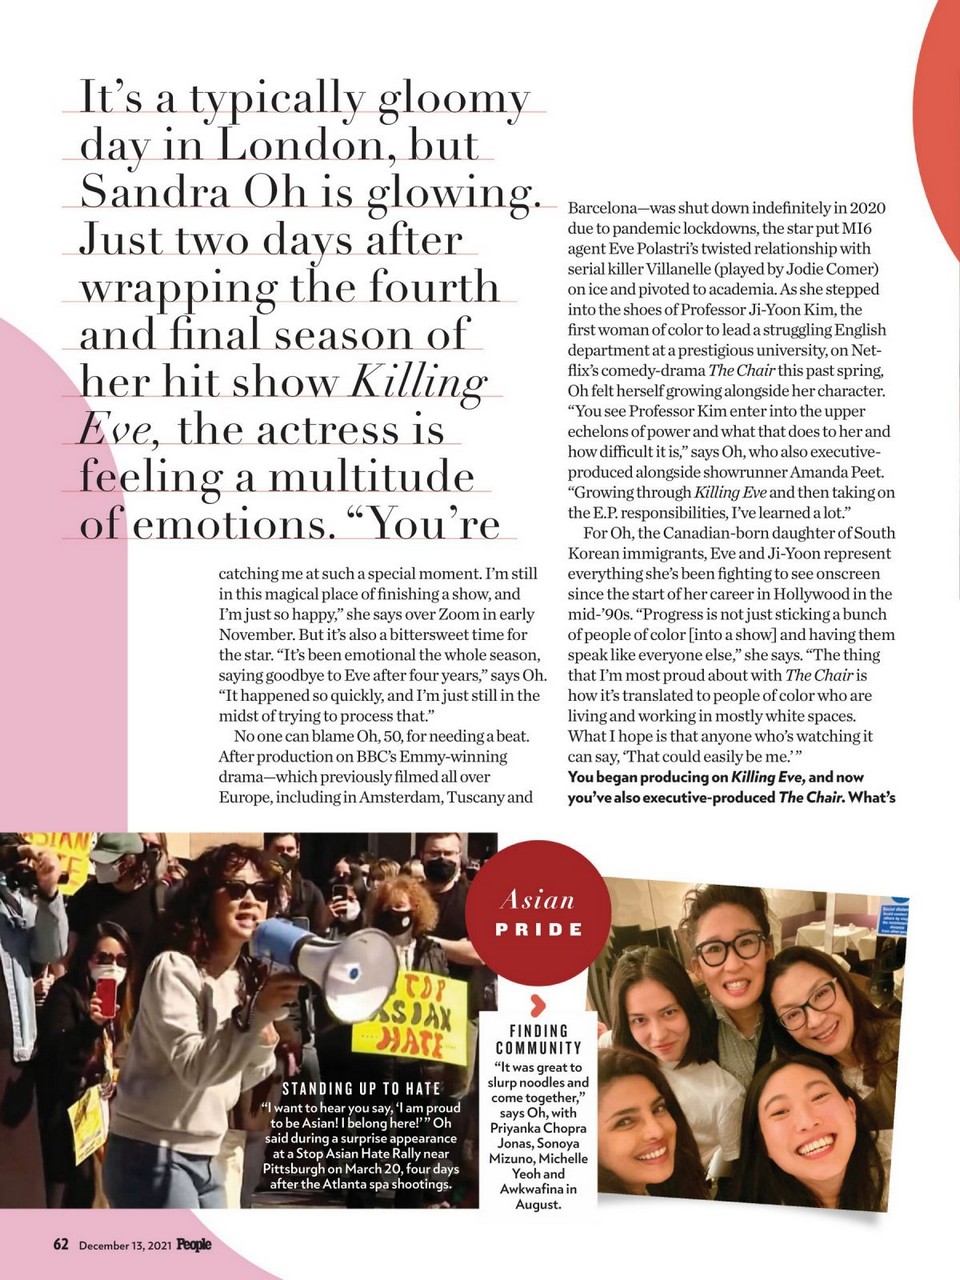 Sandra Oh People Magazine December